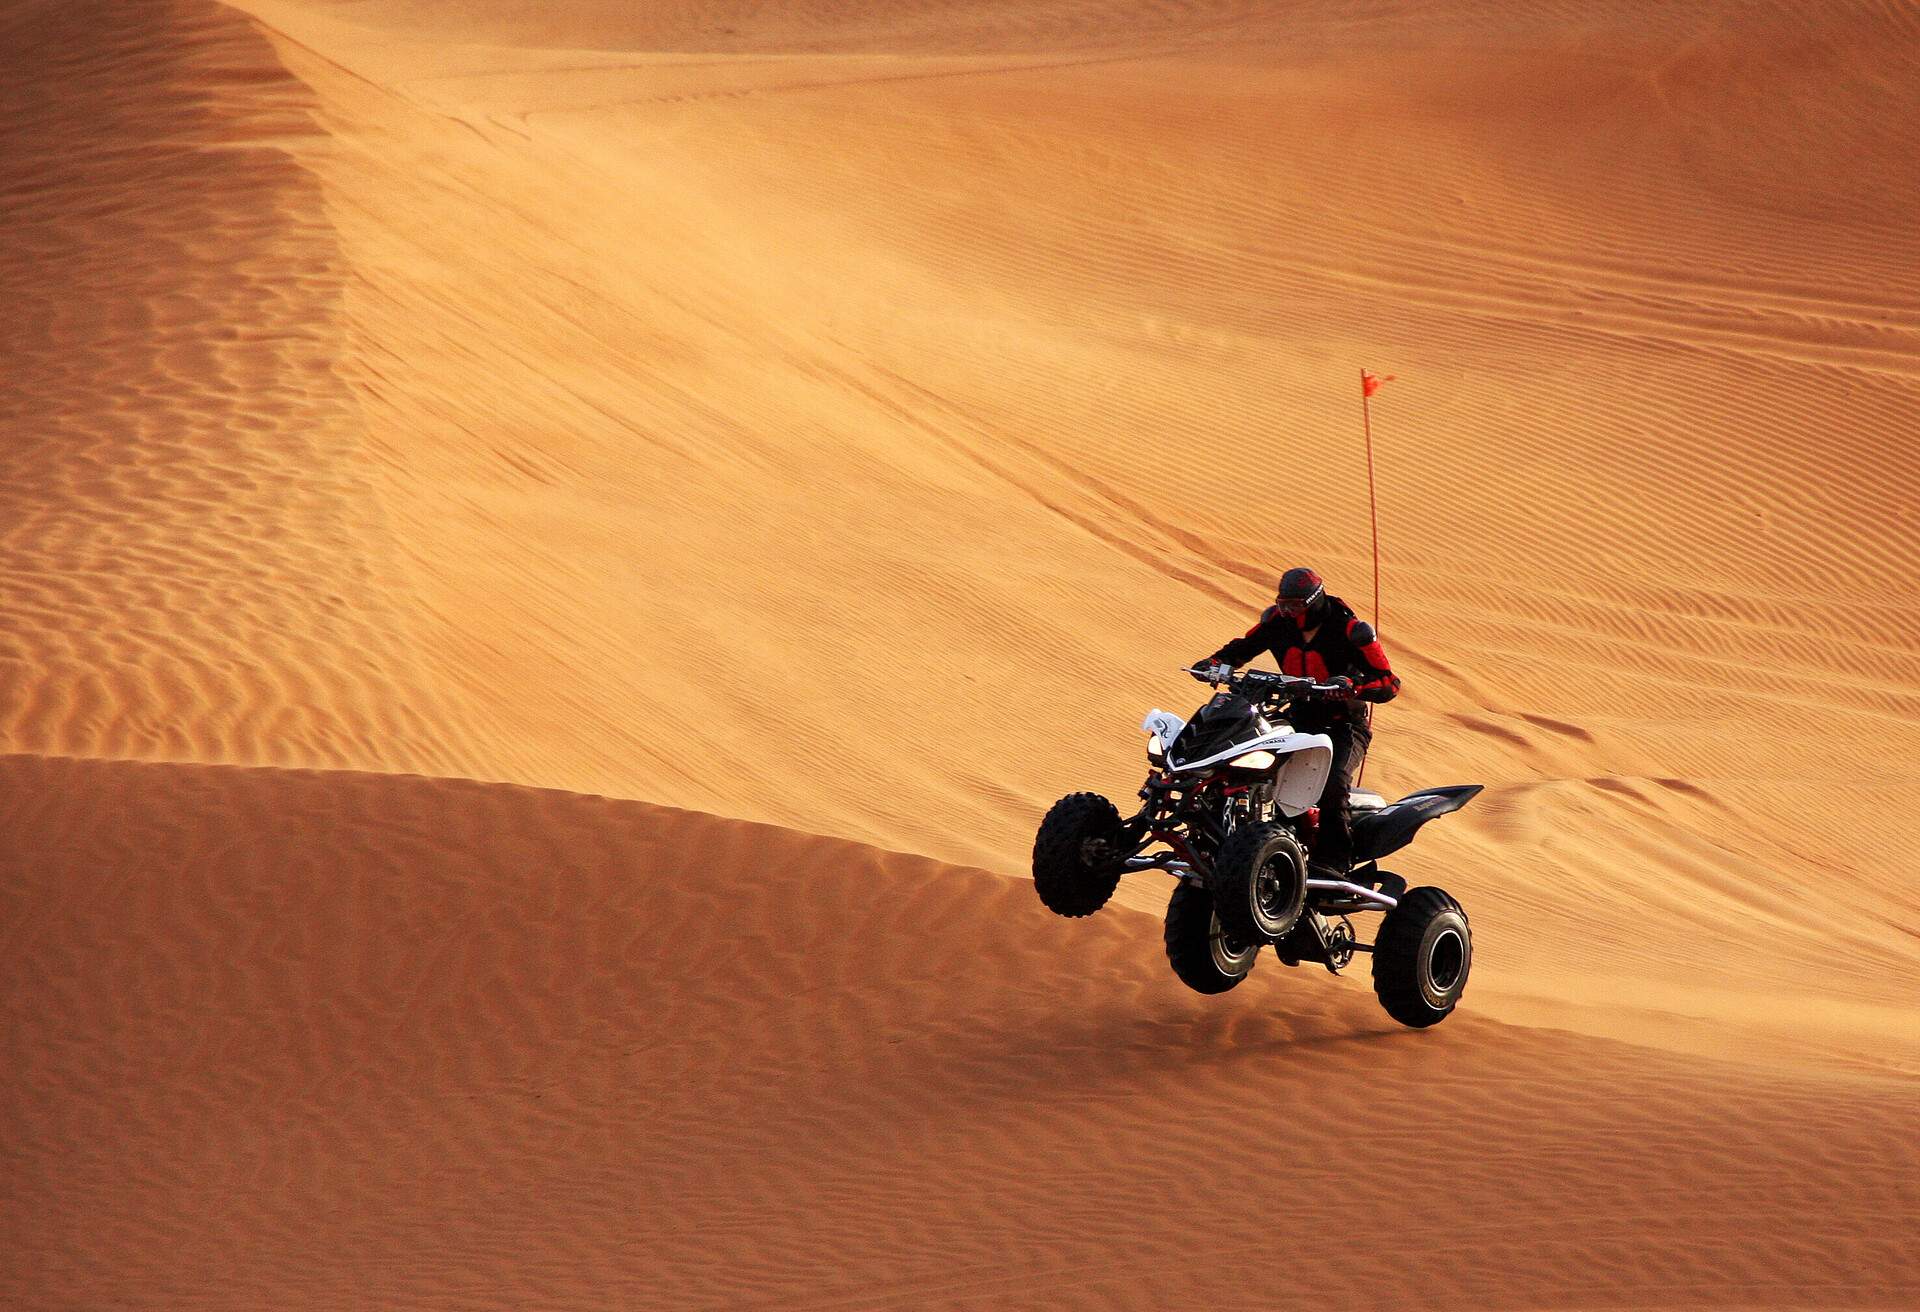 Man riding quad bike in desert, Dubai.